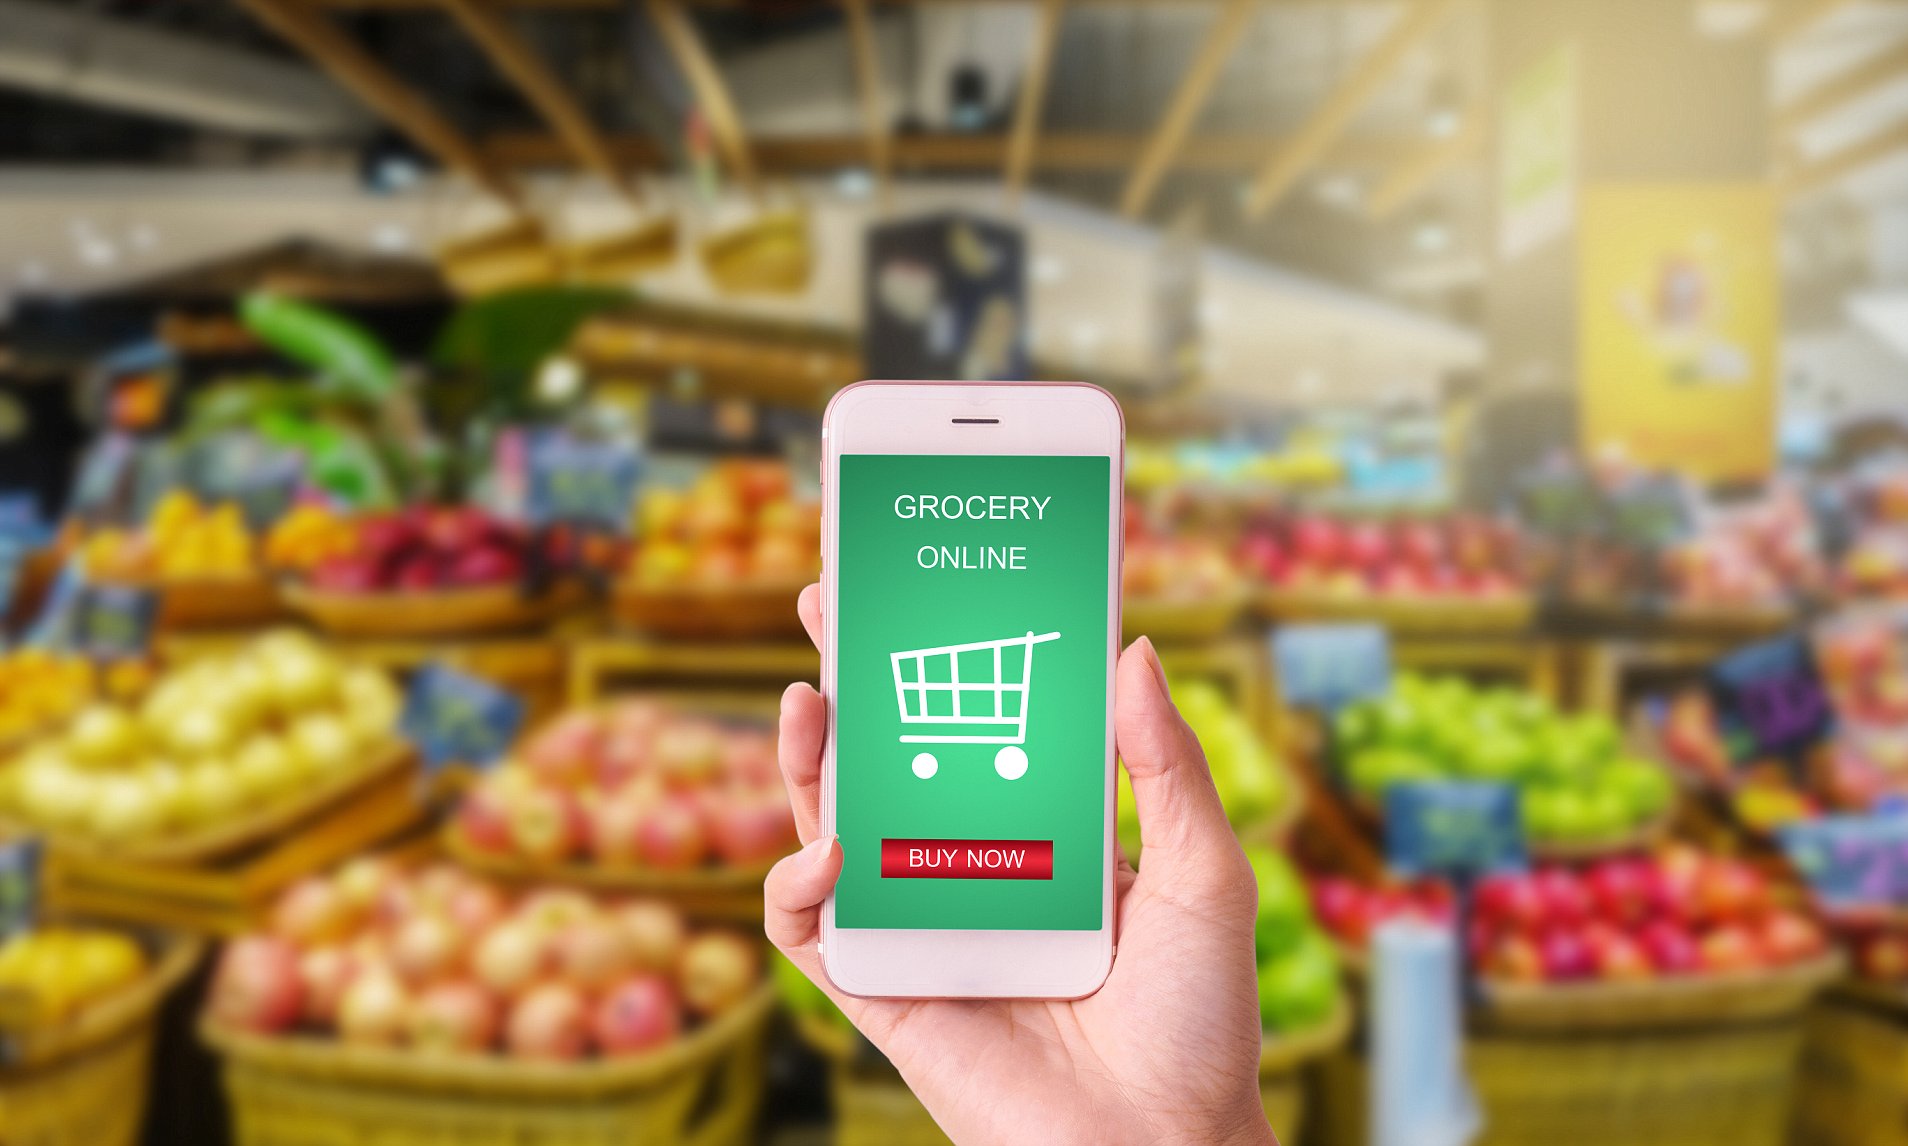 India’s online grocery market